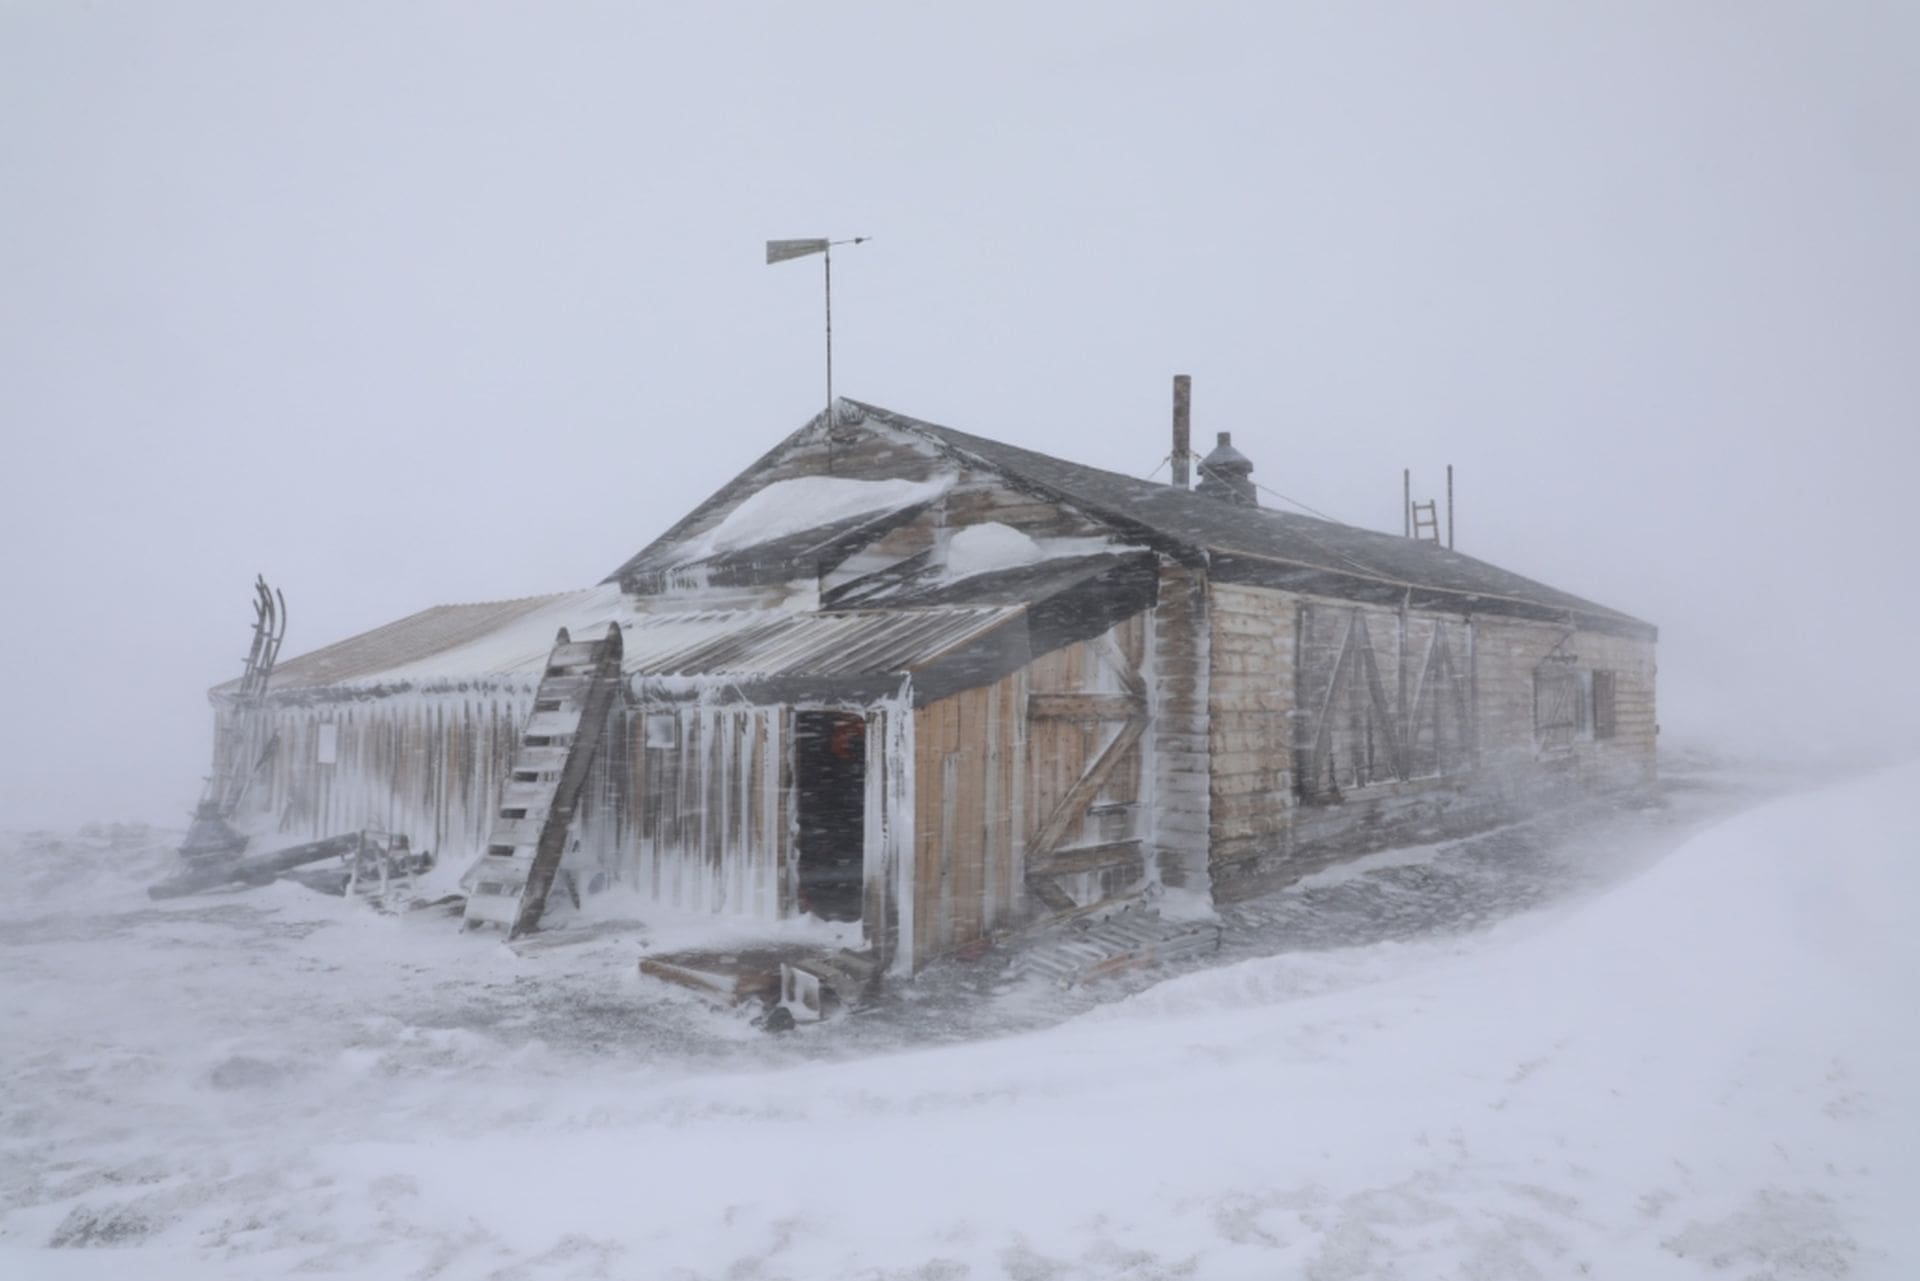 Scott's Hut, Cape Evans in a condition 2 storm